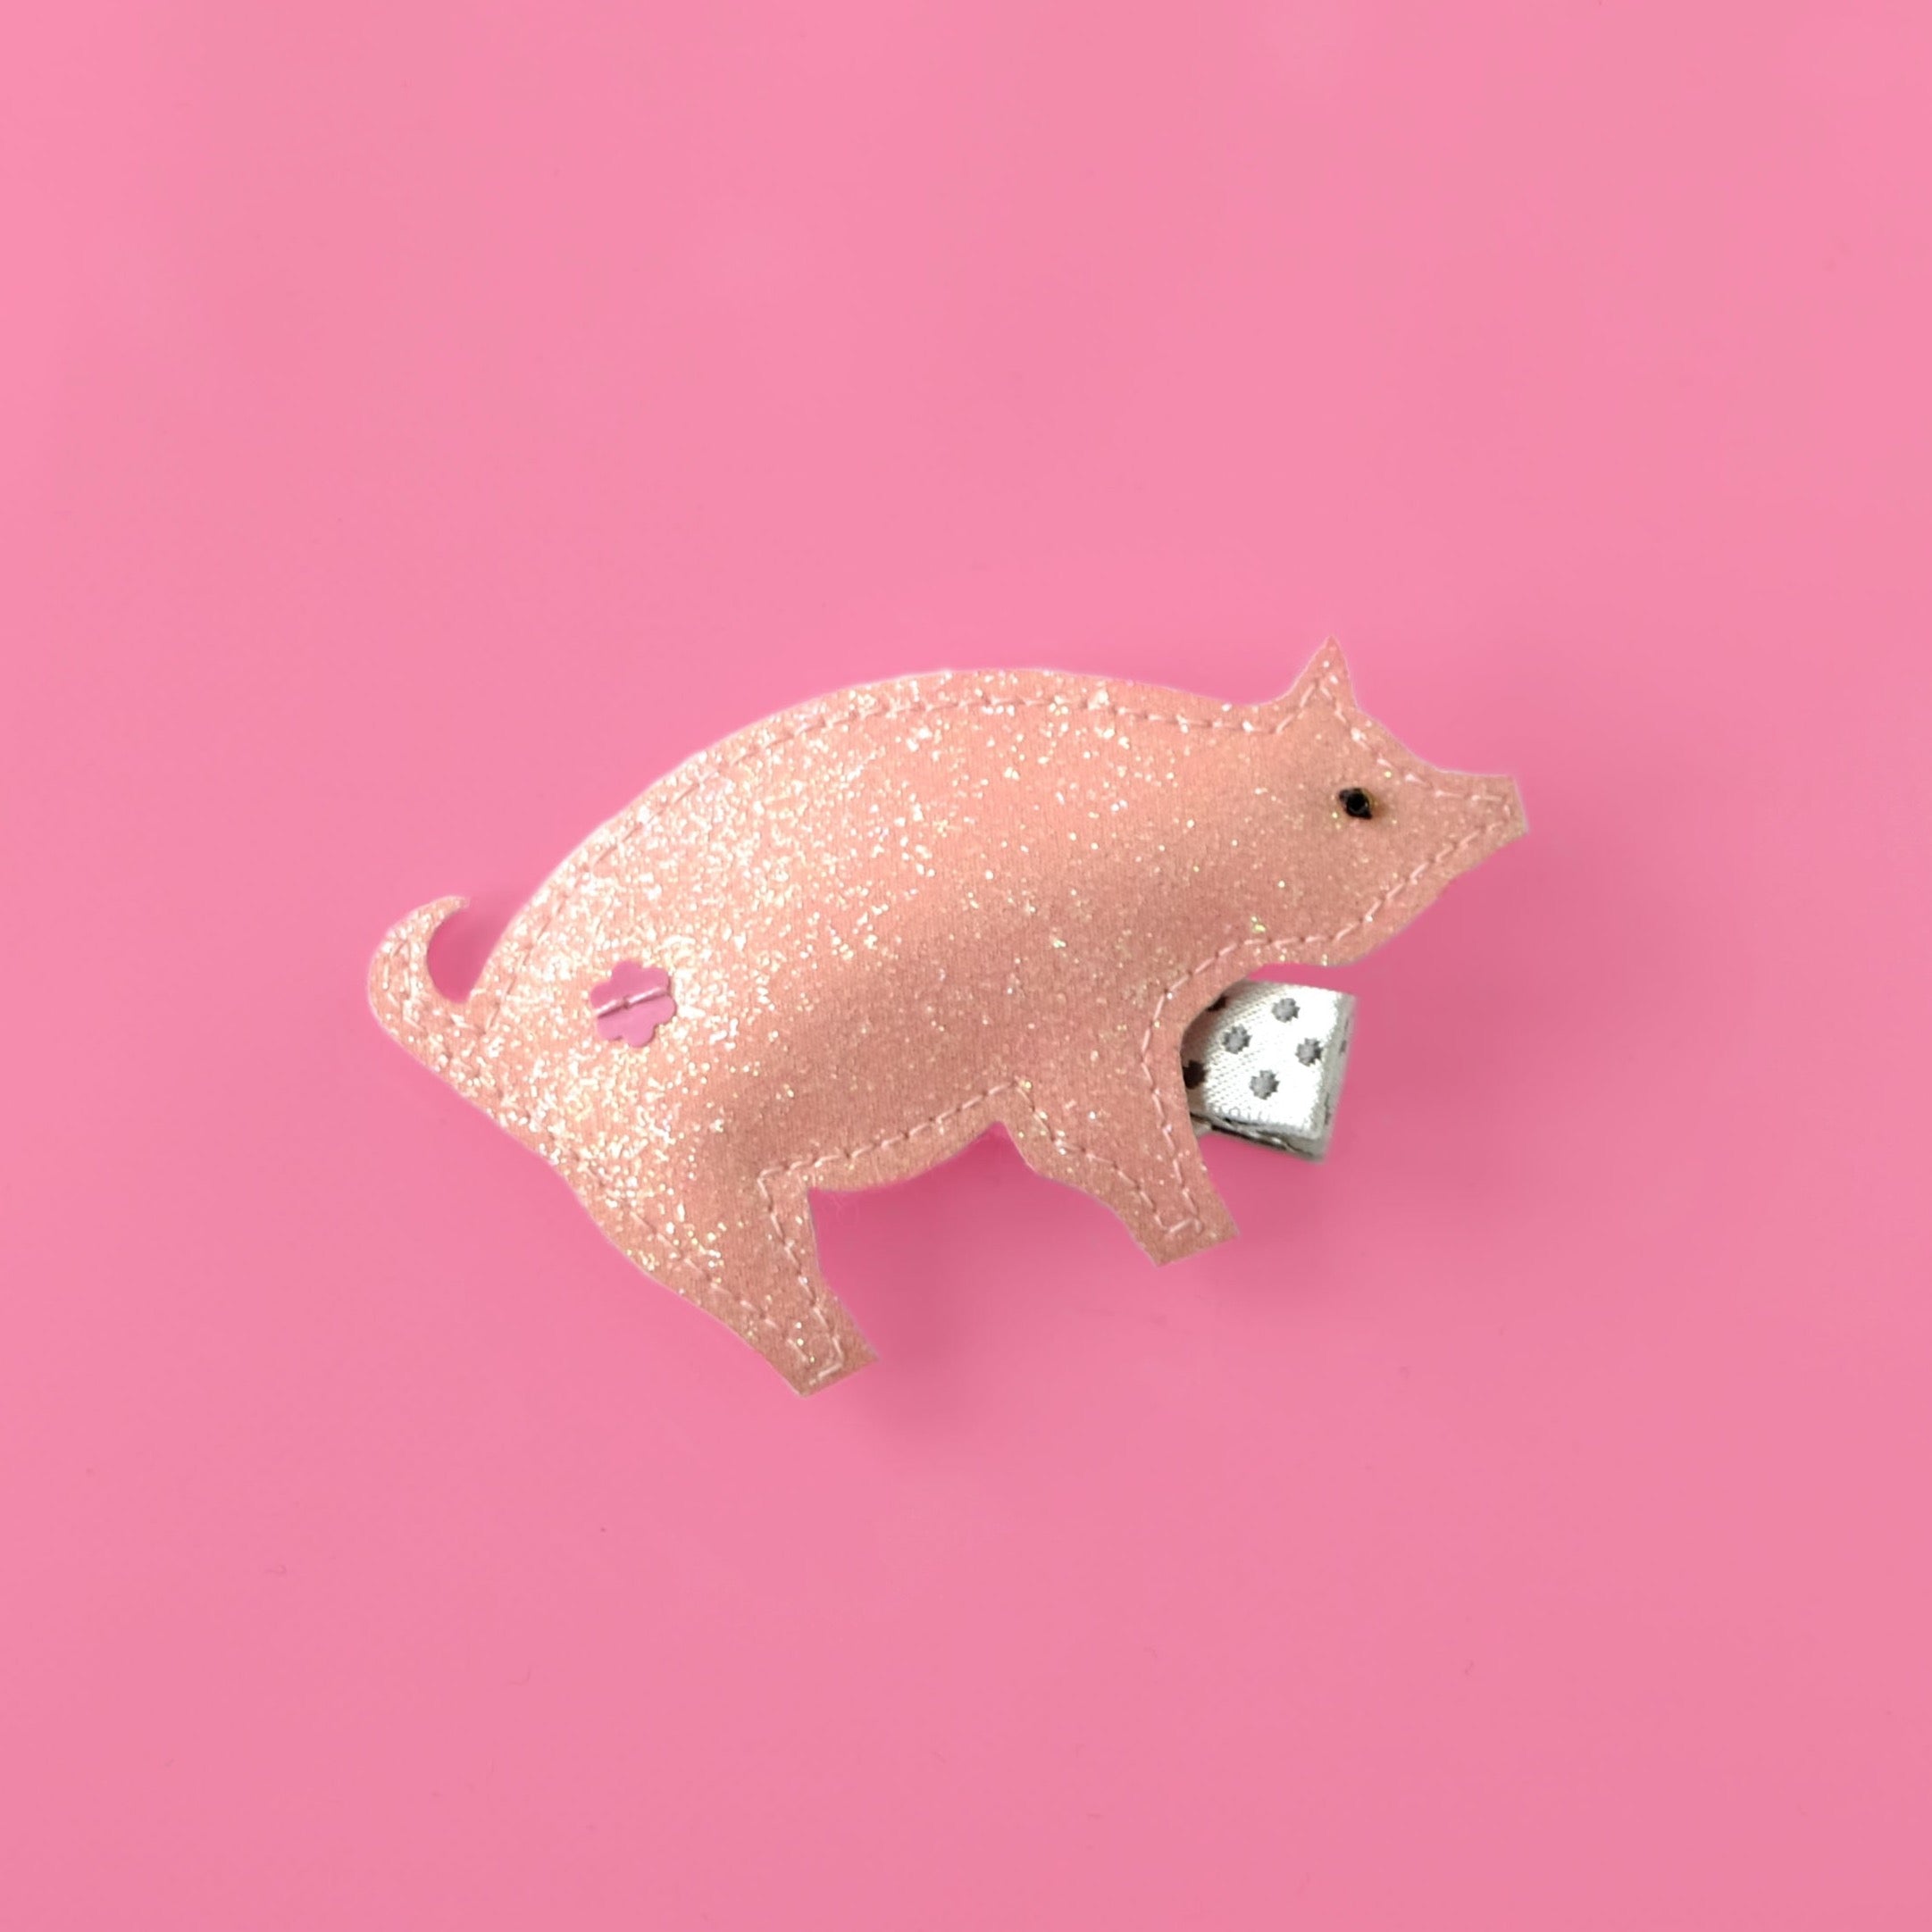 Pink pig hair clip, a fun hair accessory for all little farm animal lovers.